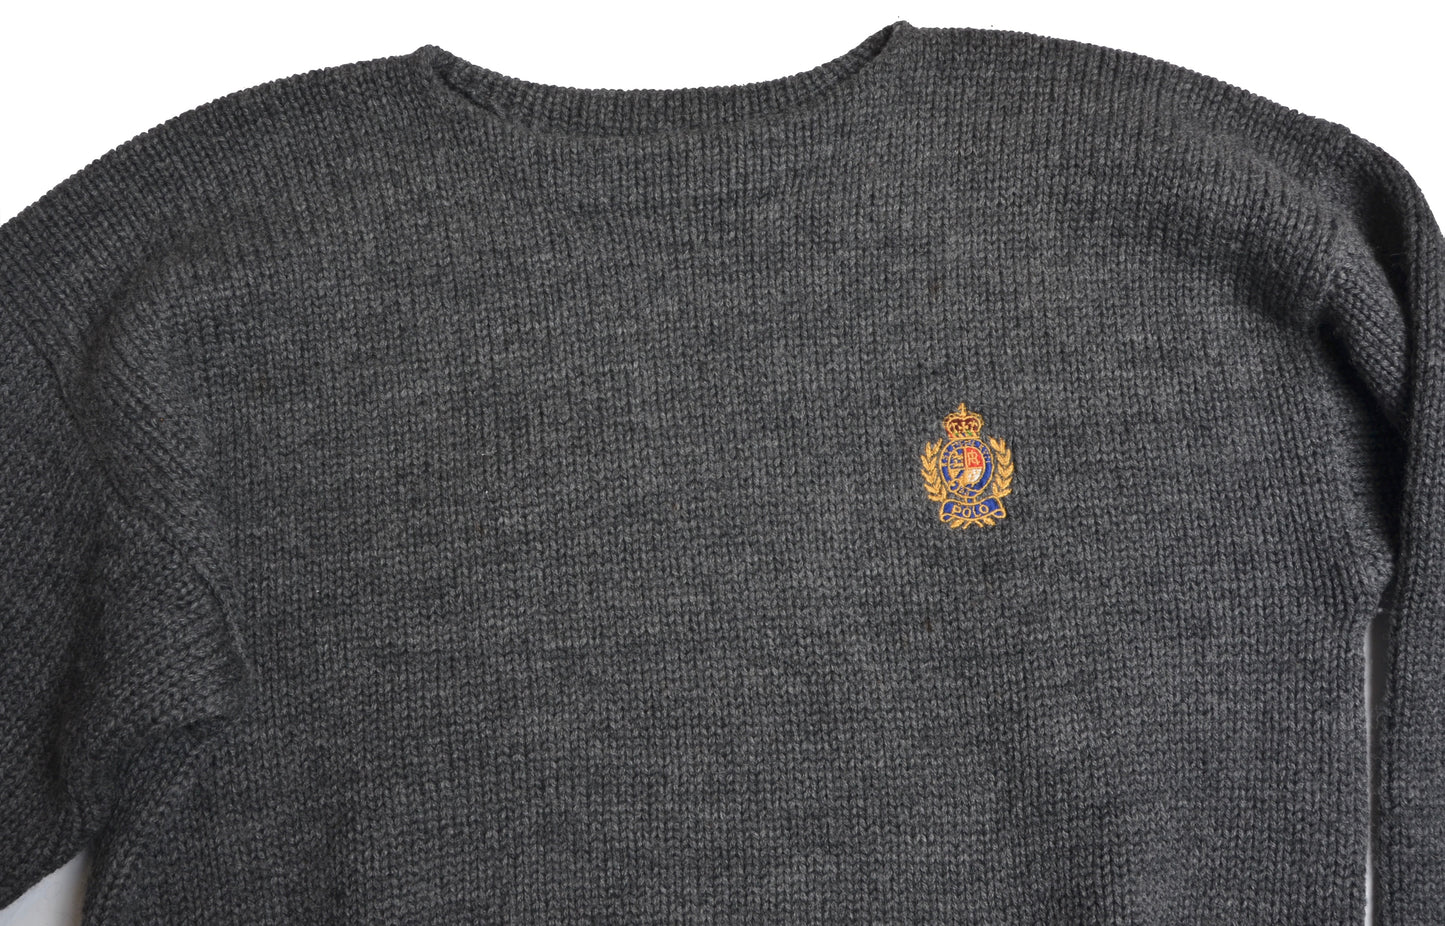 Vintage Polo Ralph Lauren Chunky Knit Sweater Size XL - Grey